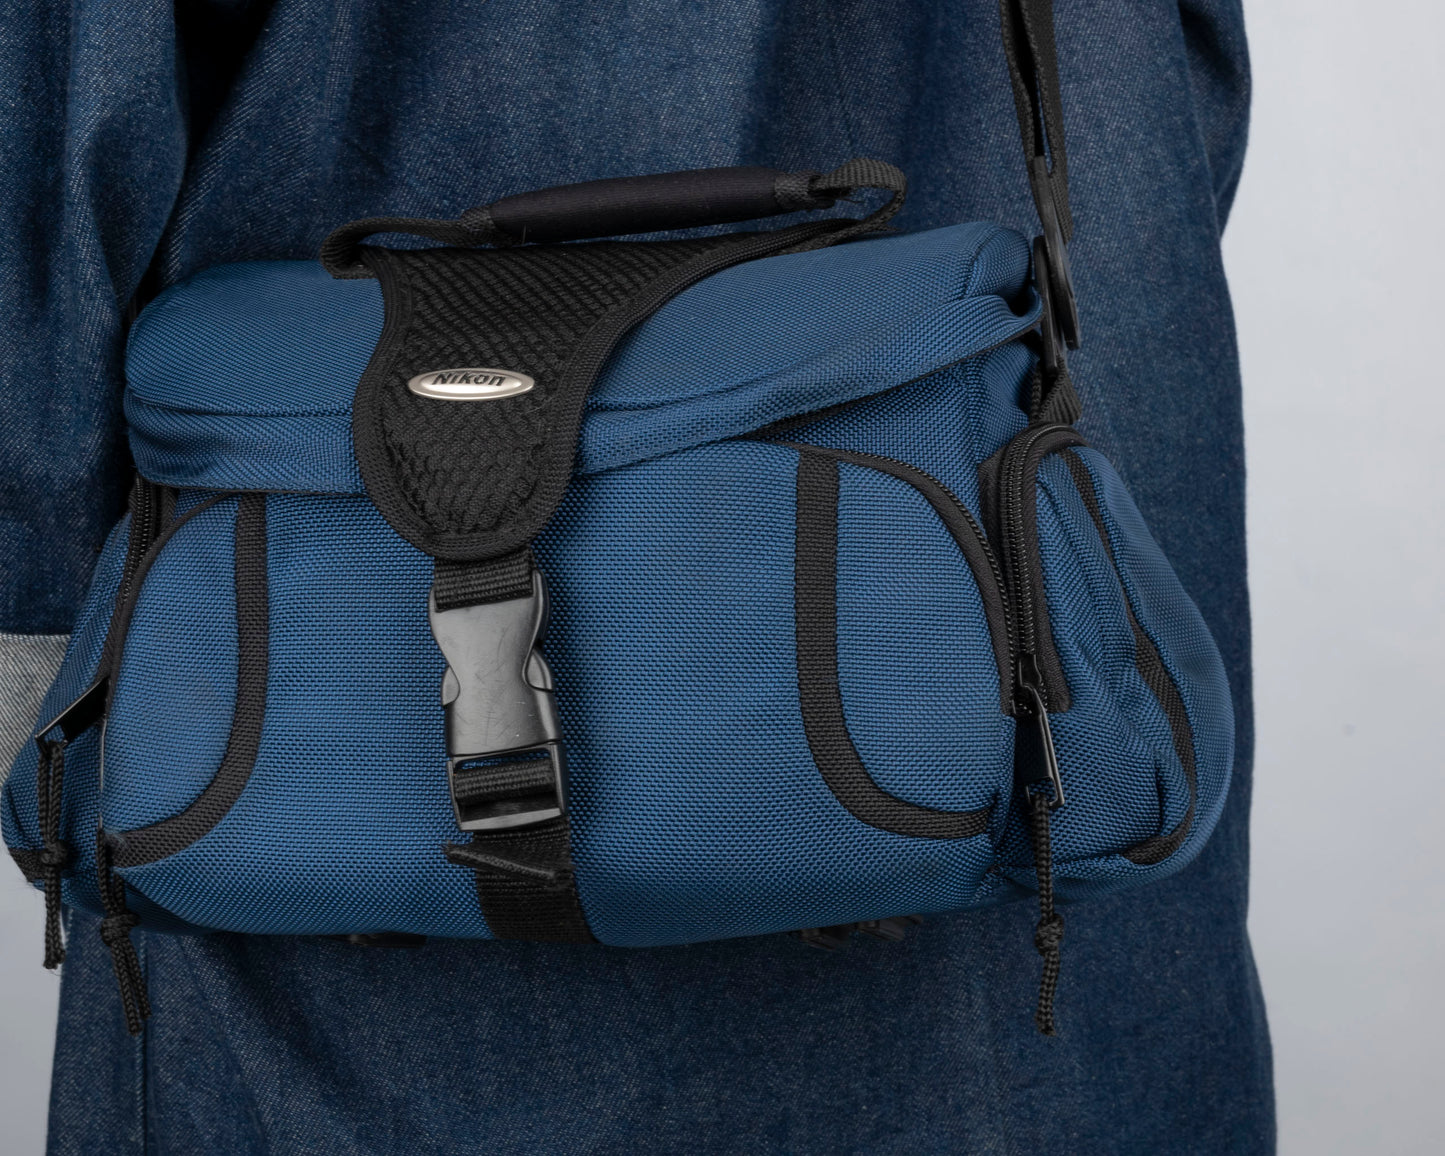 Nikon mid-sized blue and black camera bag